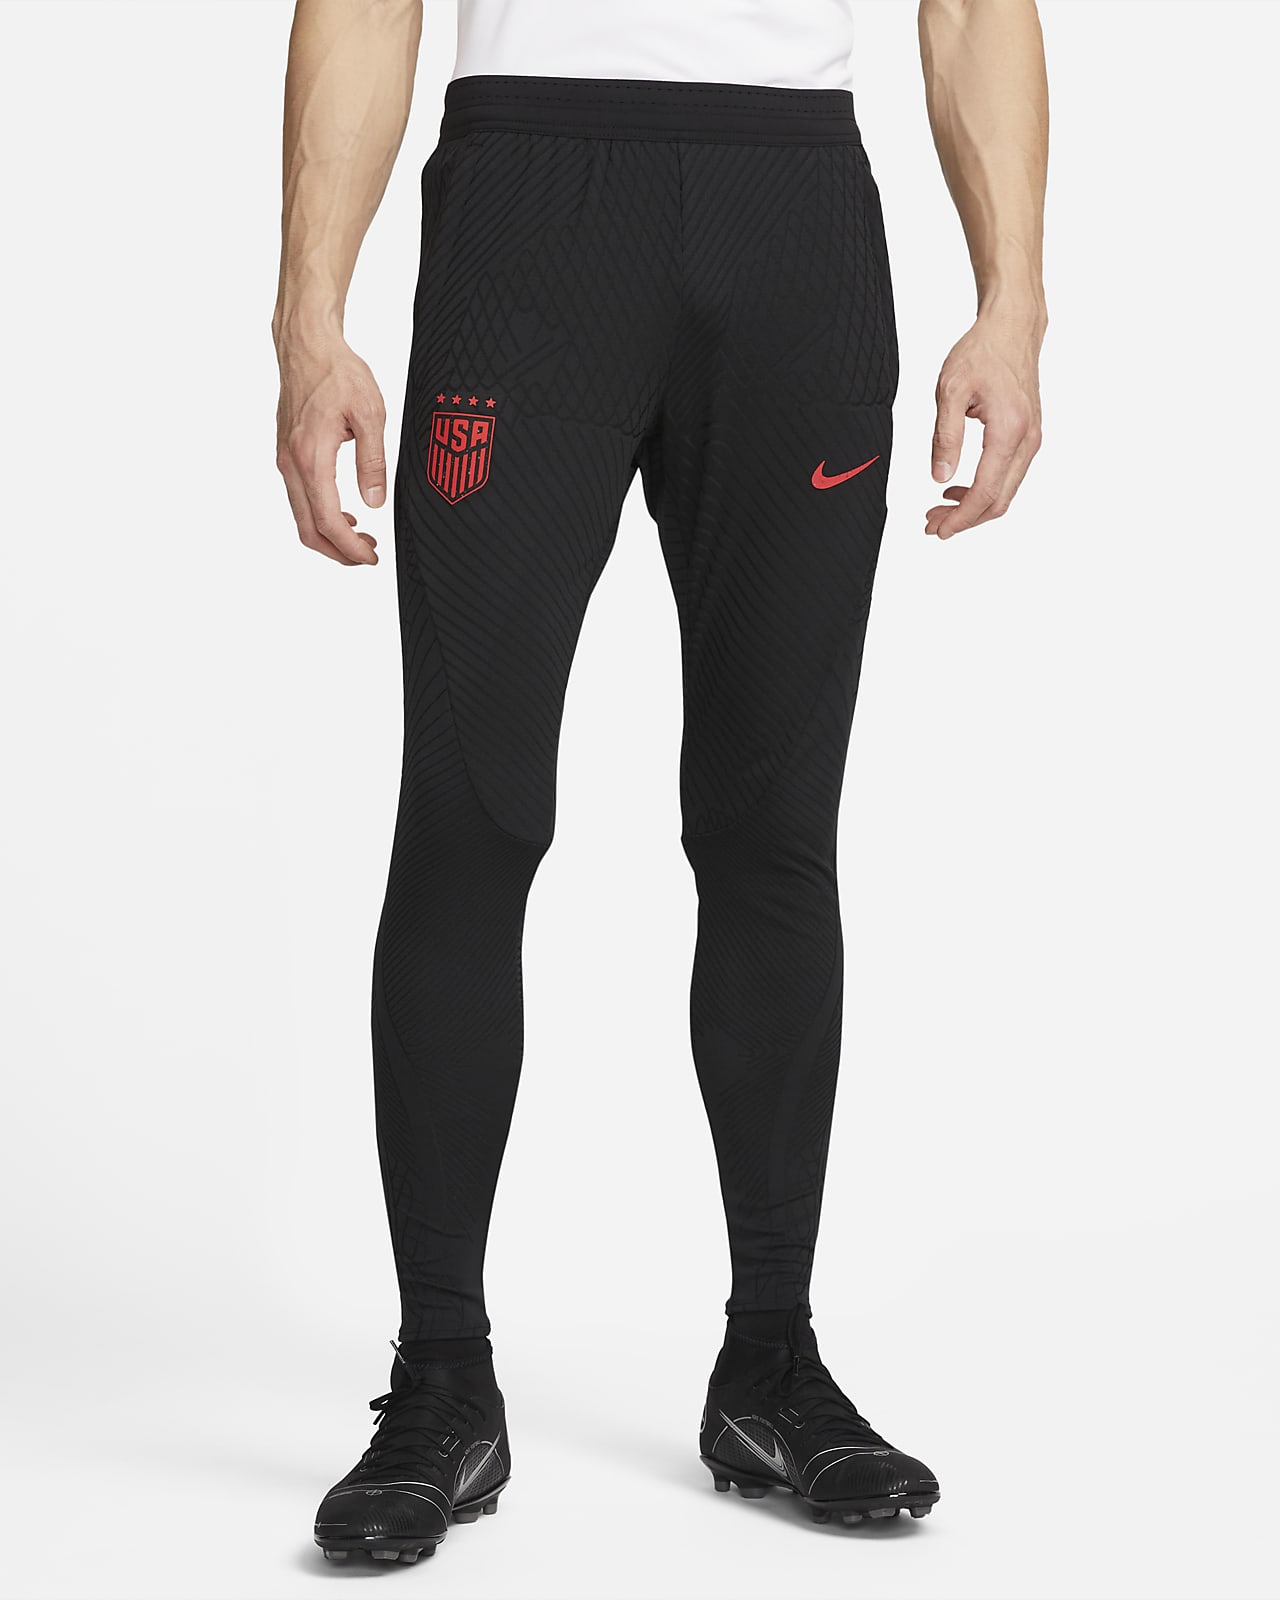 U.S. Men's Knit Soccer Pants